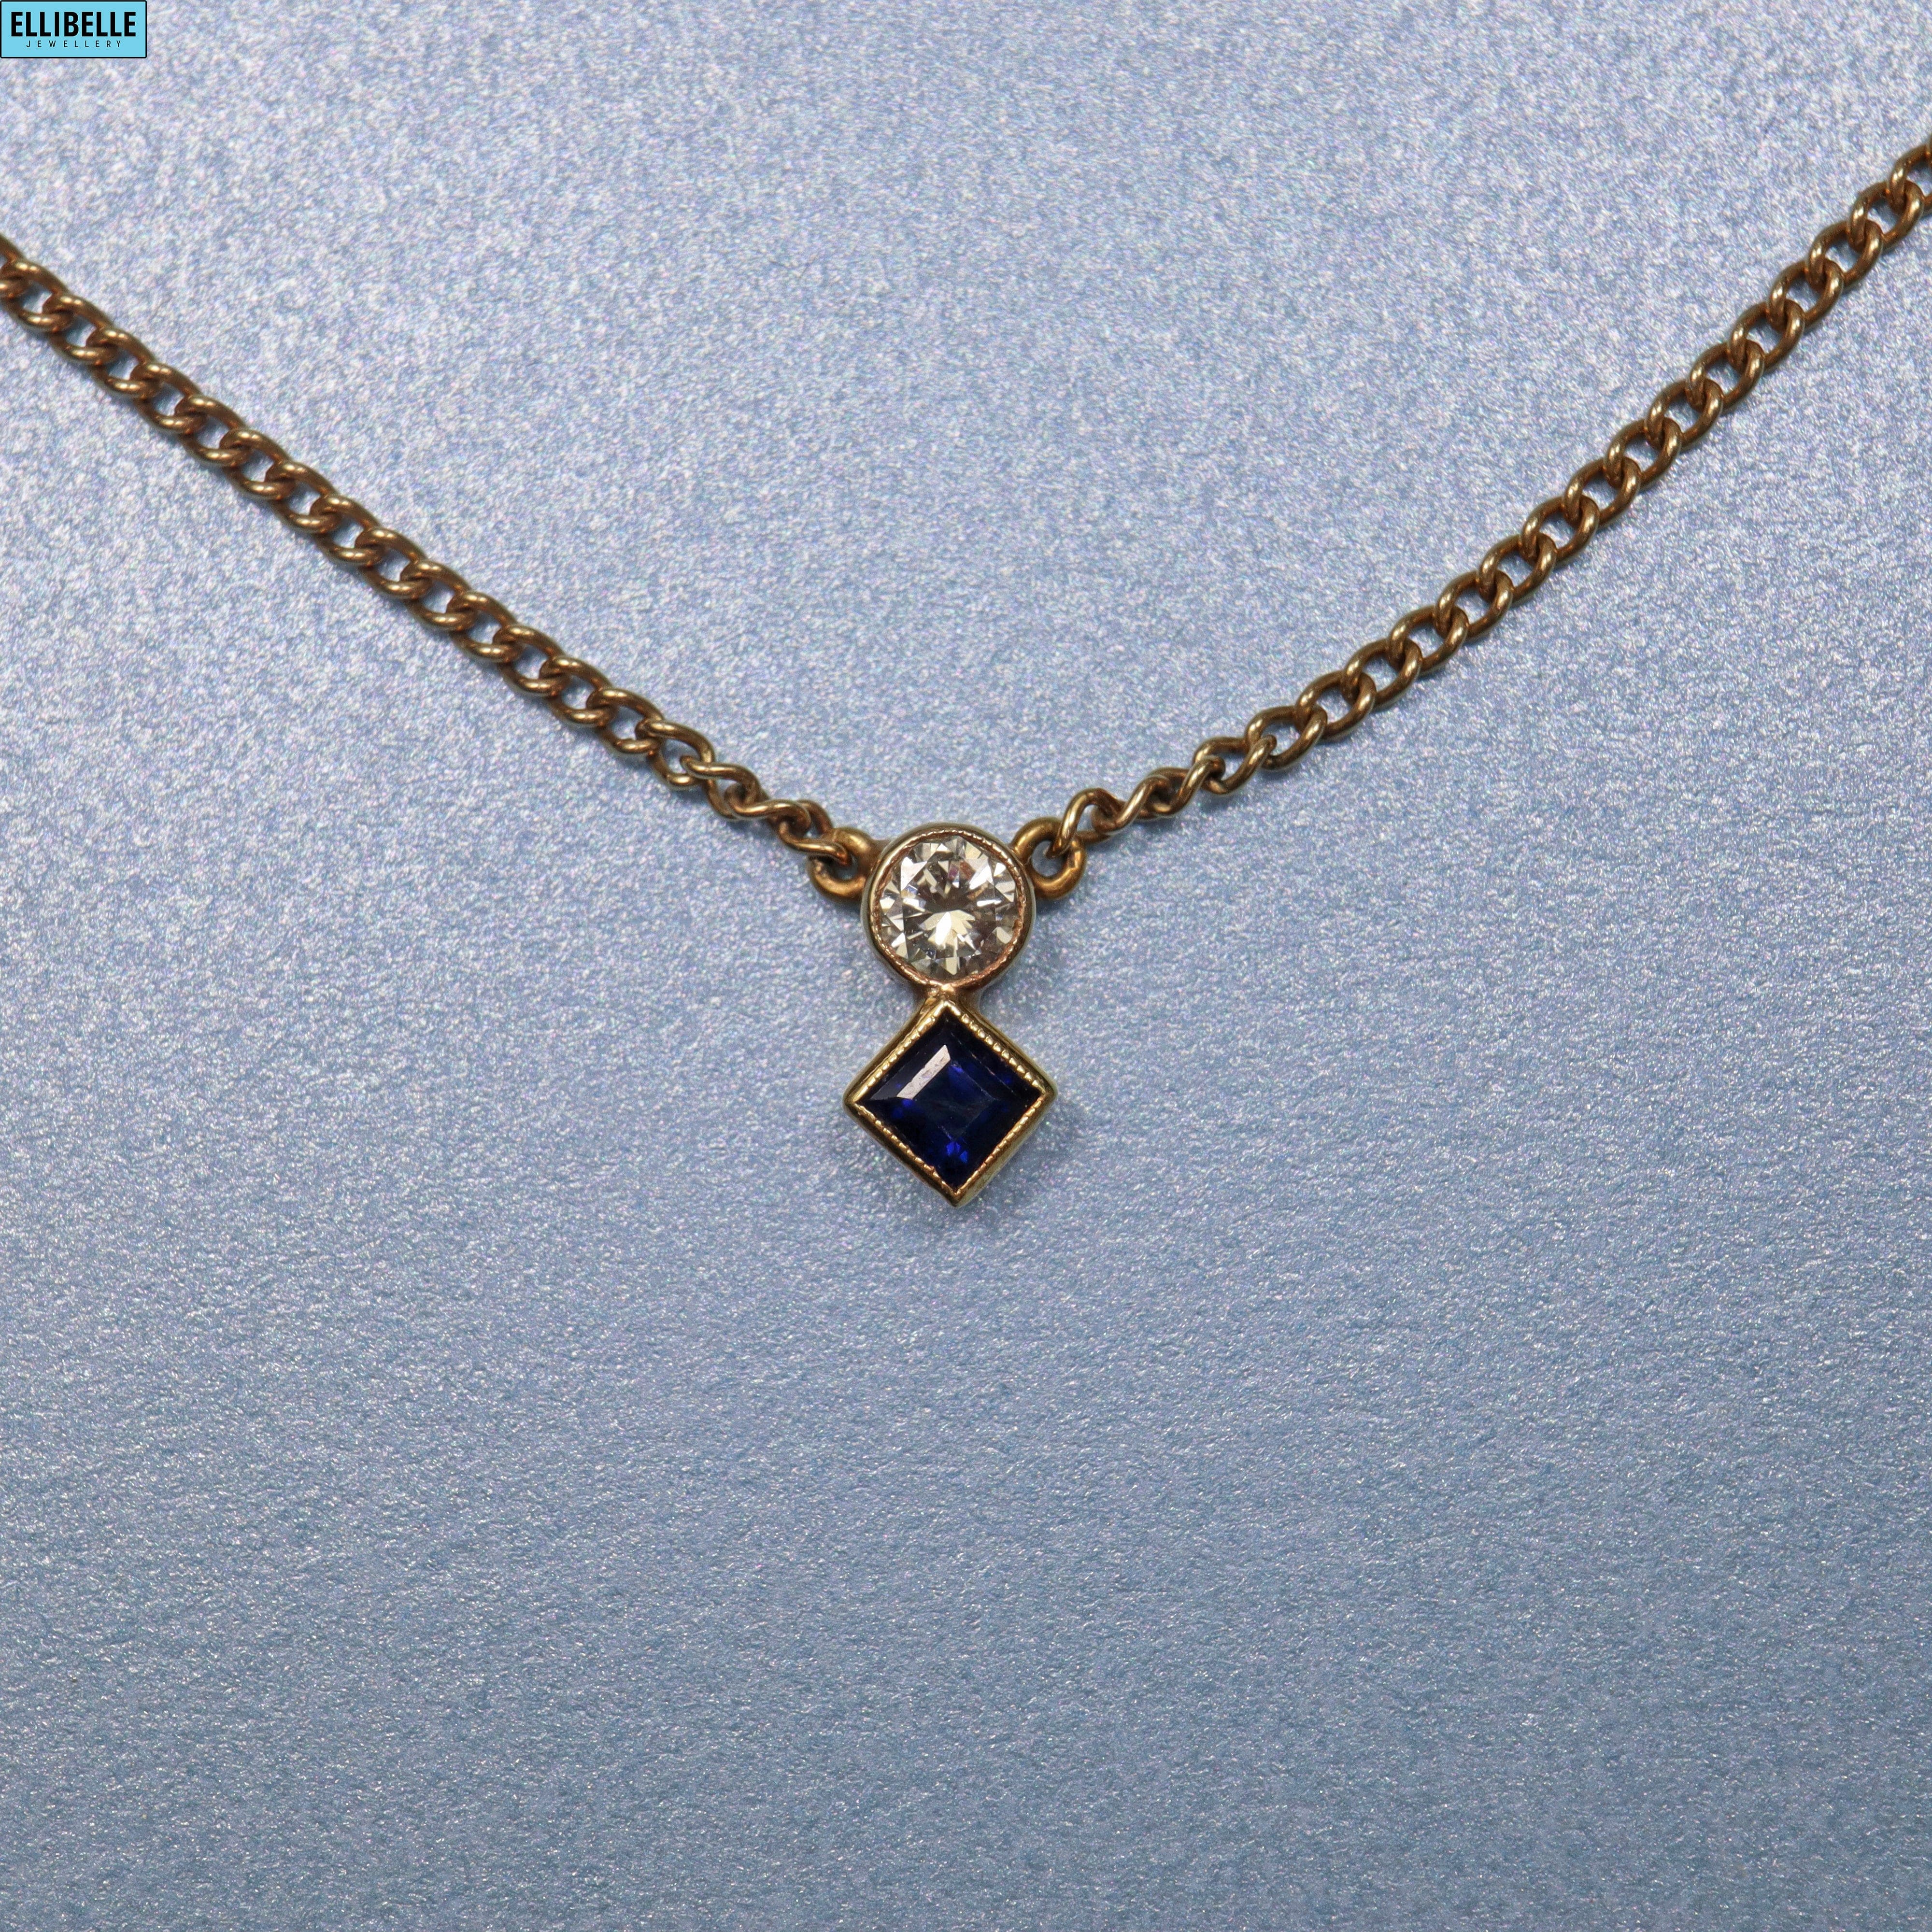 Ellibelle Jewellery ART DECO SAPPHIRE & DIAMOND GOLD PENDANT NECKLACE